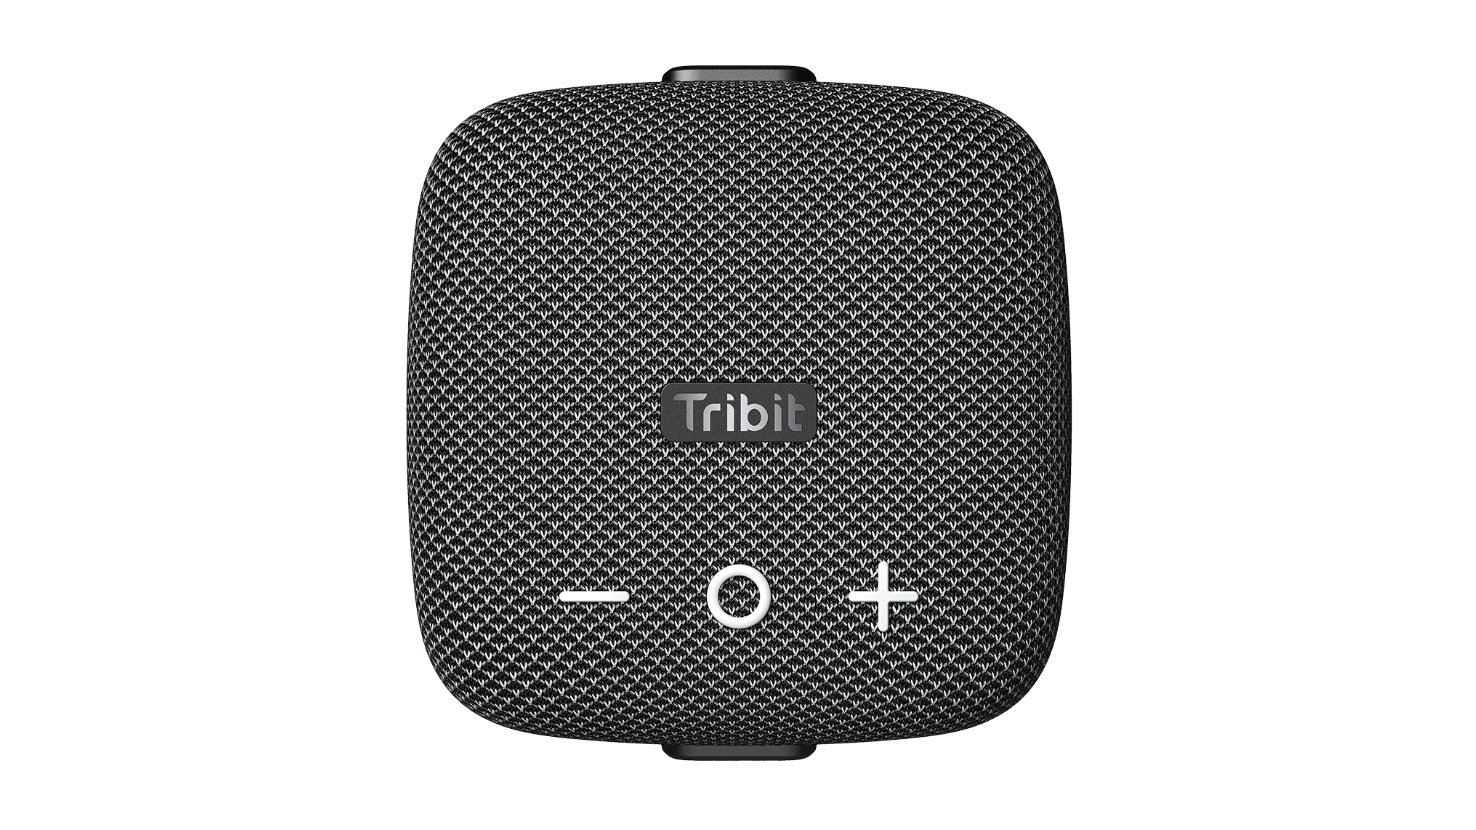 The tribit stormbox micro 2 bluetooth speaker